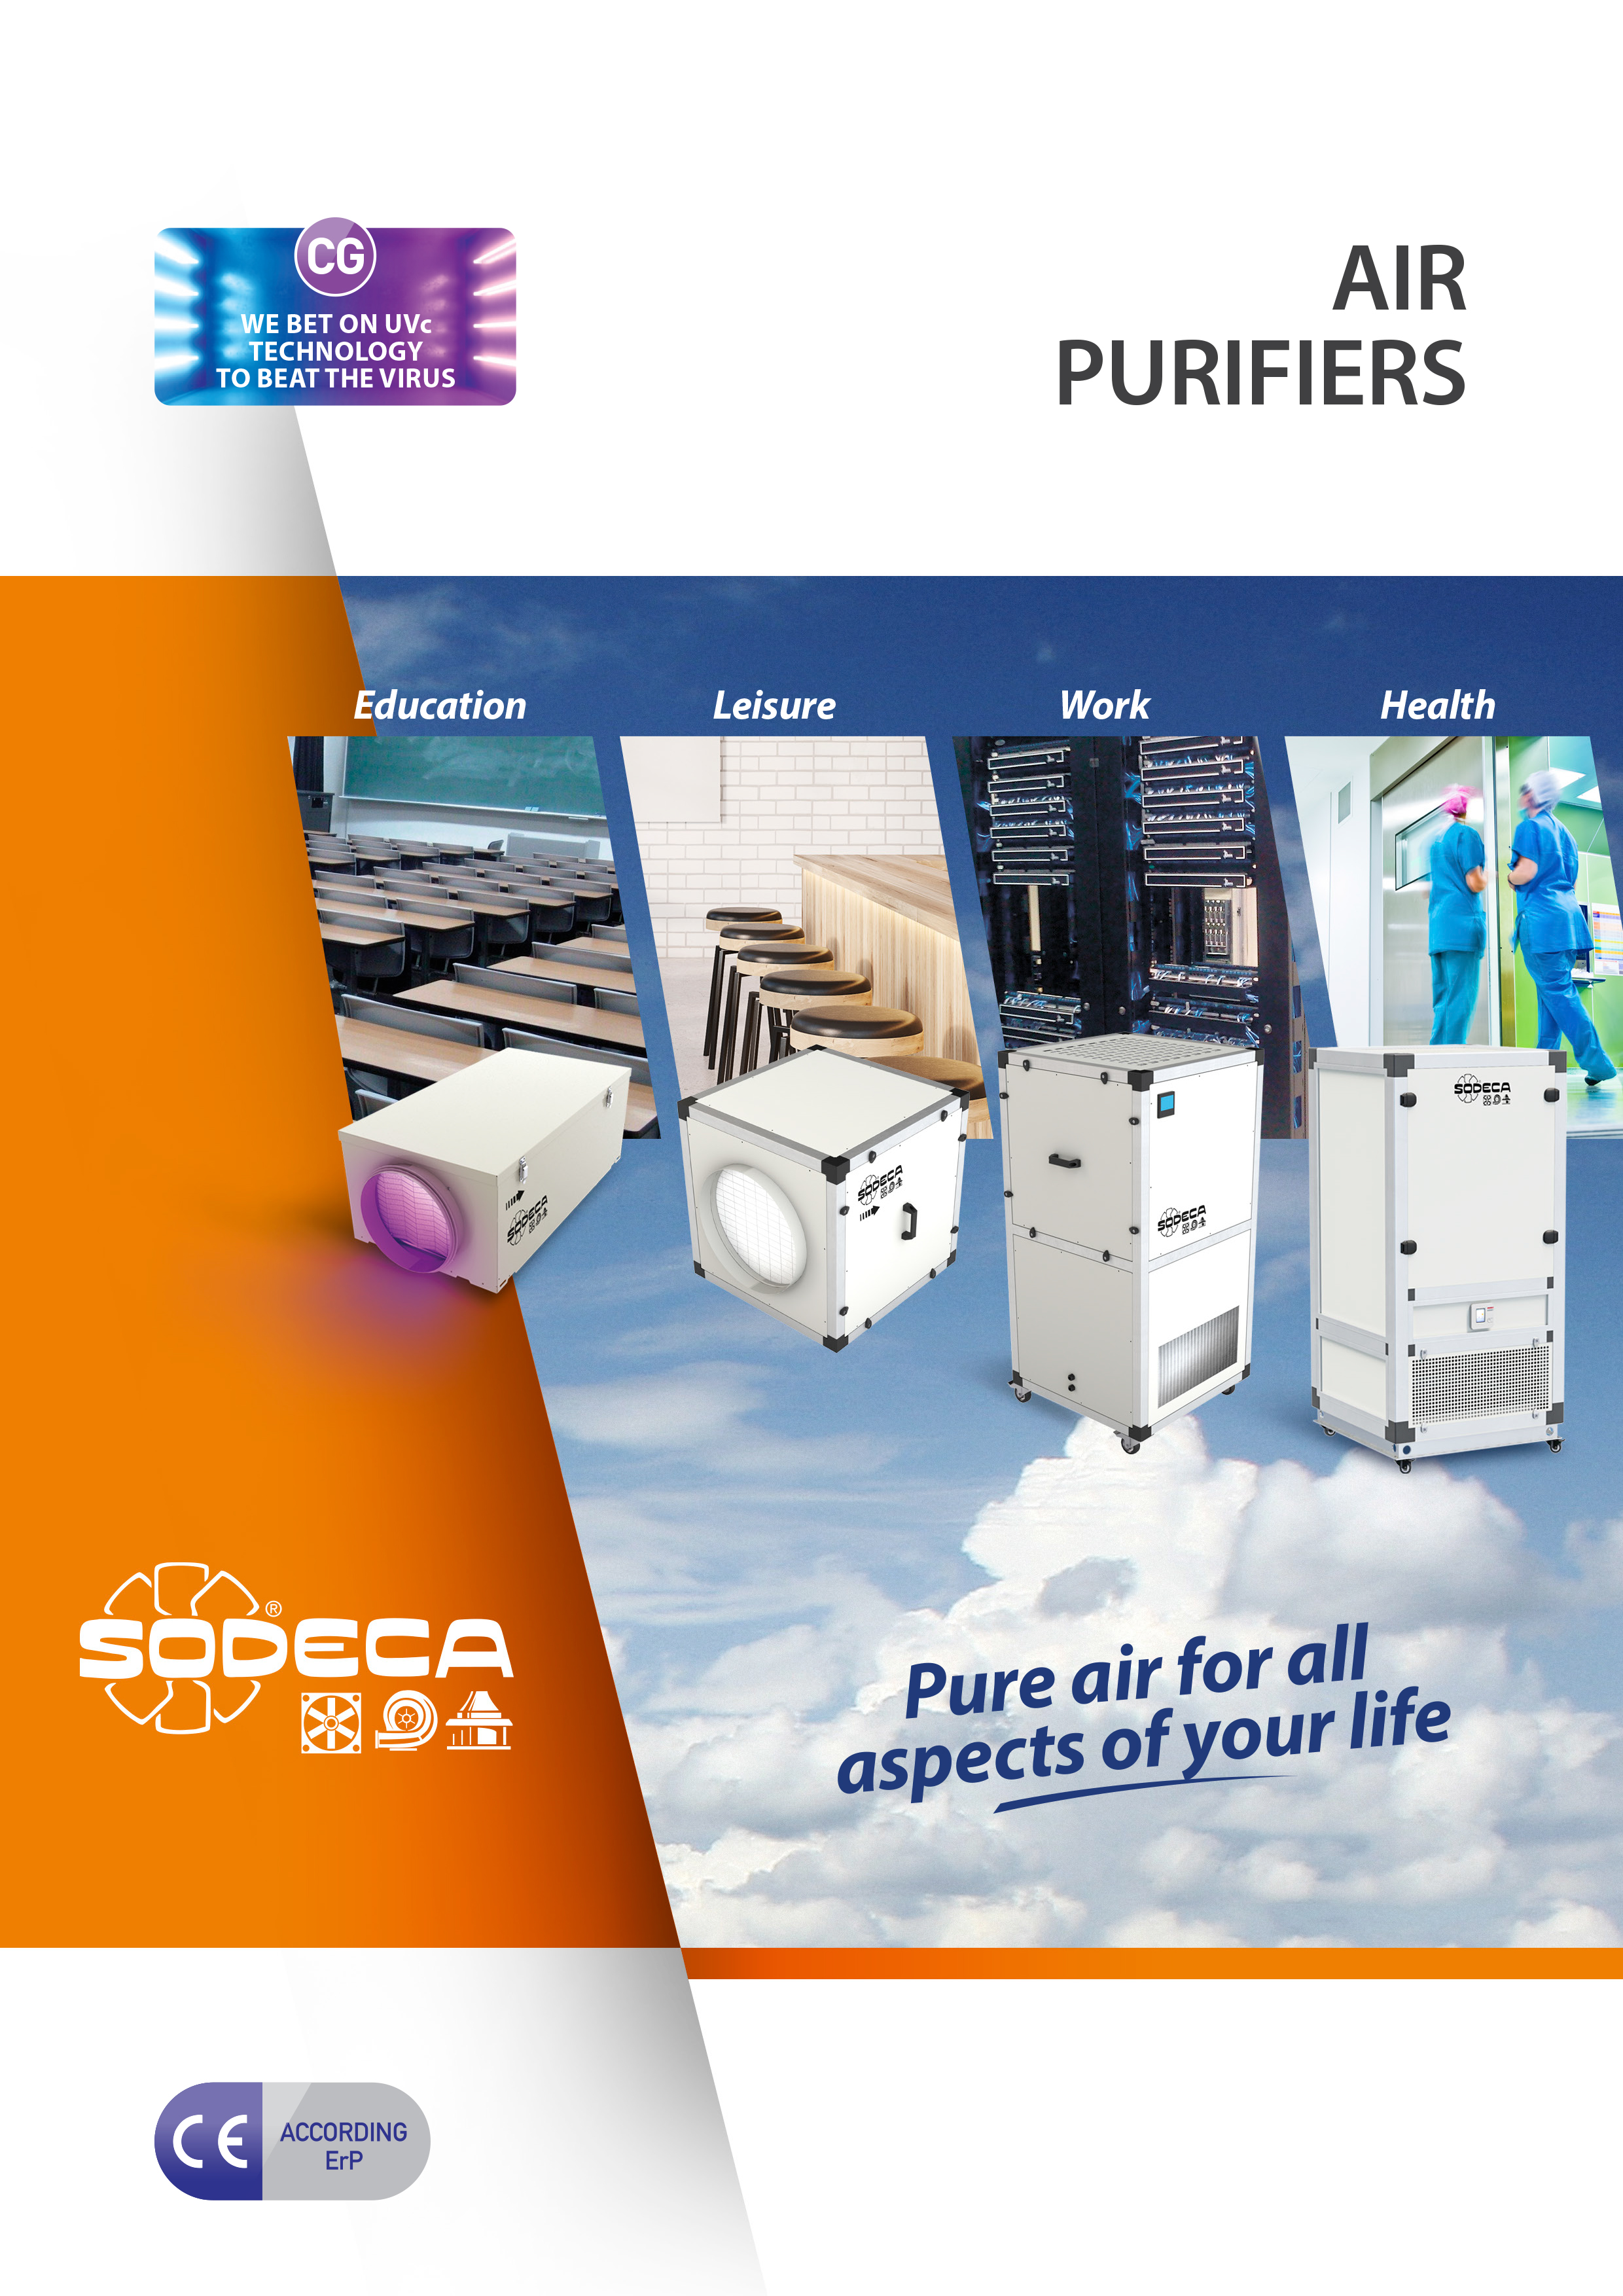 SODECA CT21 Air purifiers SA 2020 EN 1